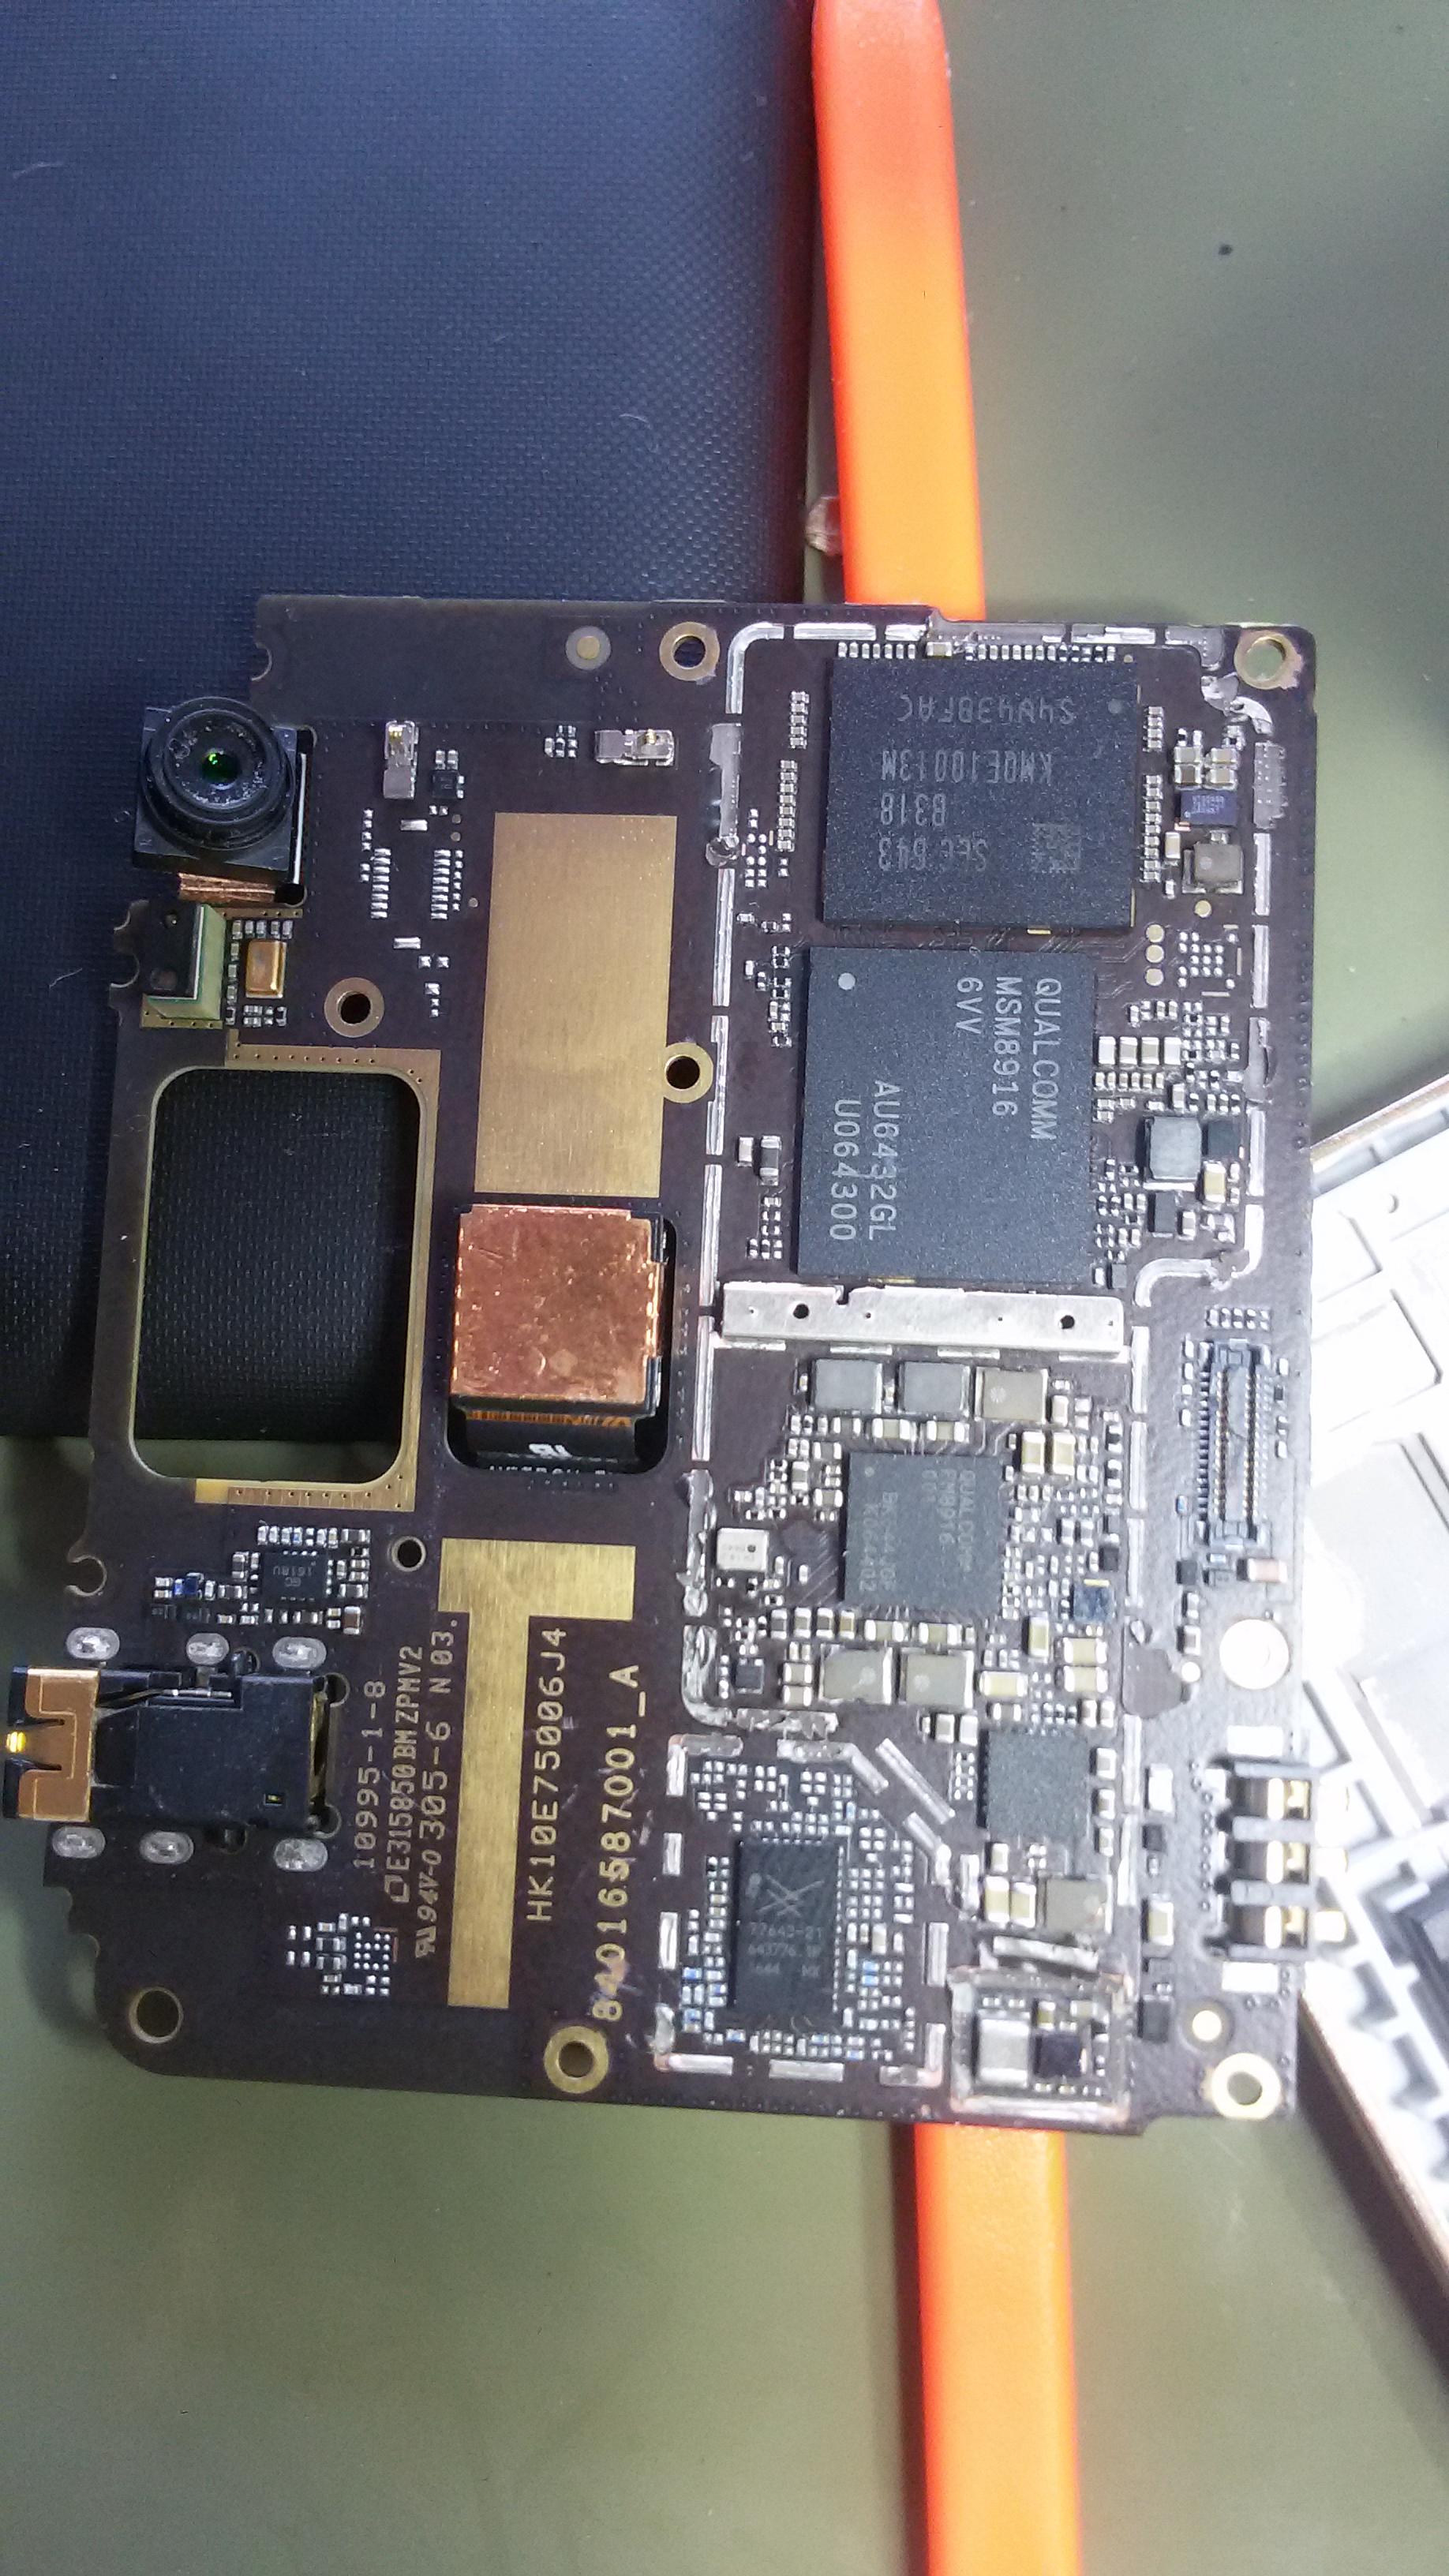 Jumper na antena Moto G4 Play (XT1603) - REPAROS NO HARDWARE - Clan GSM